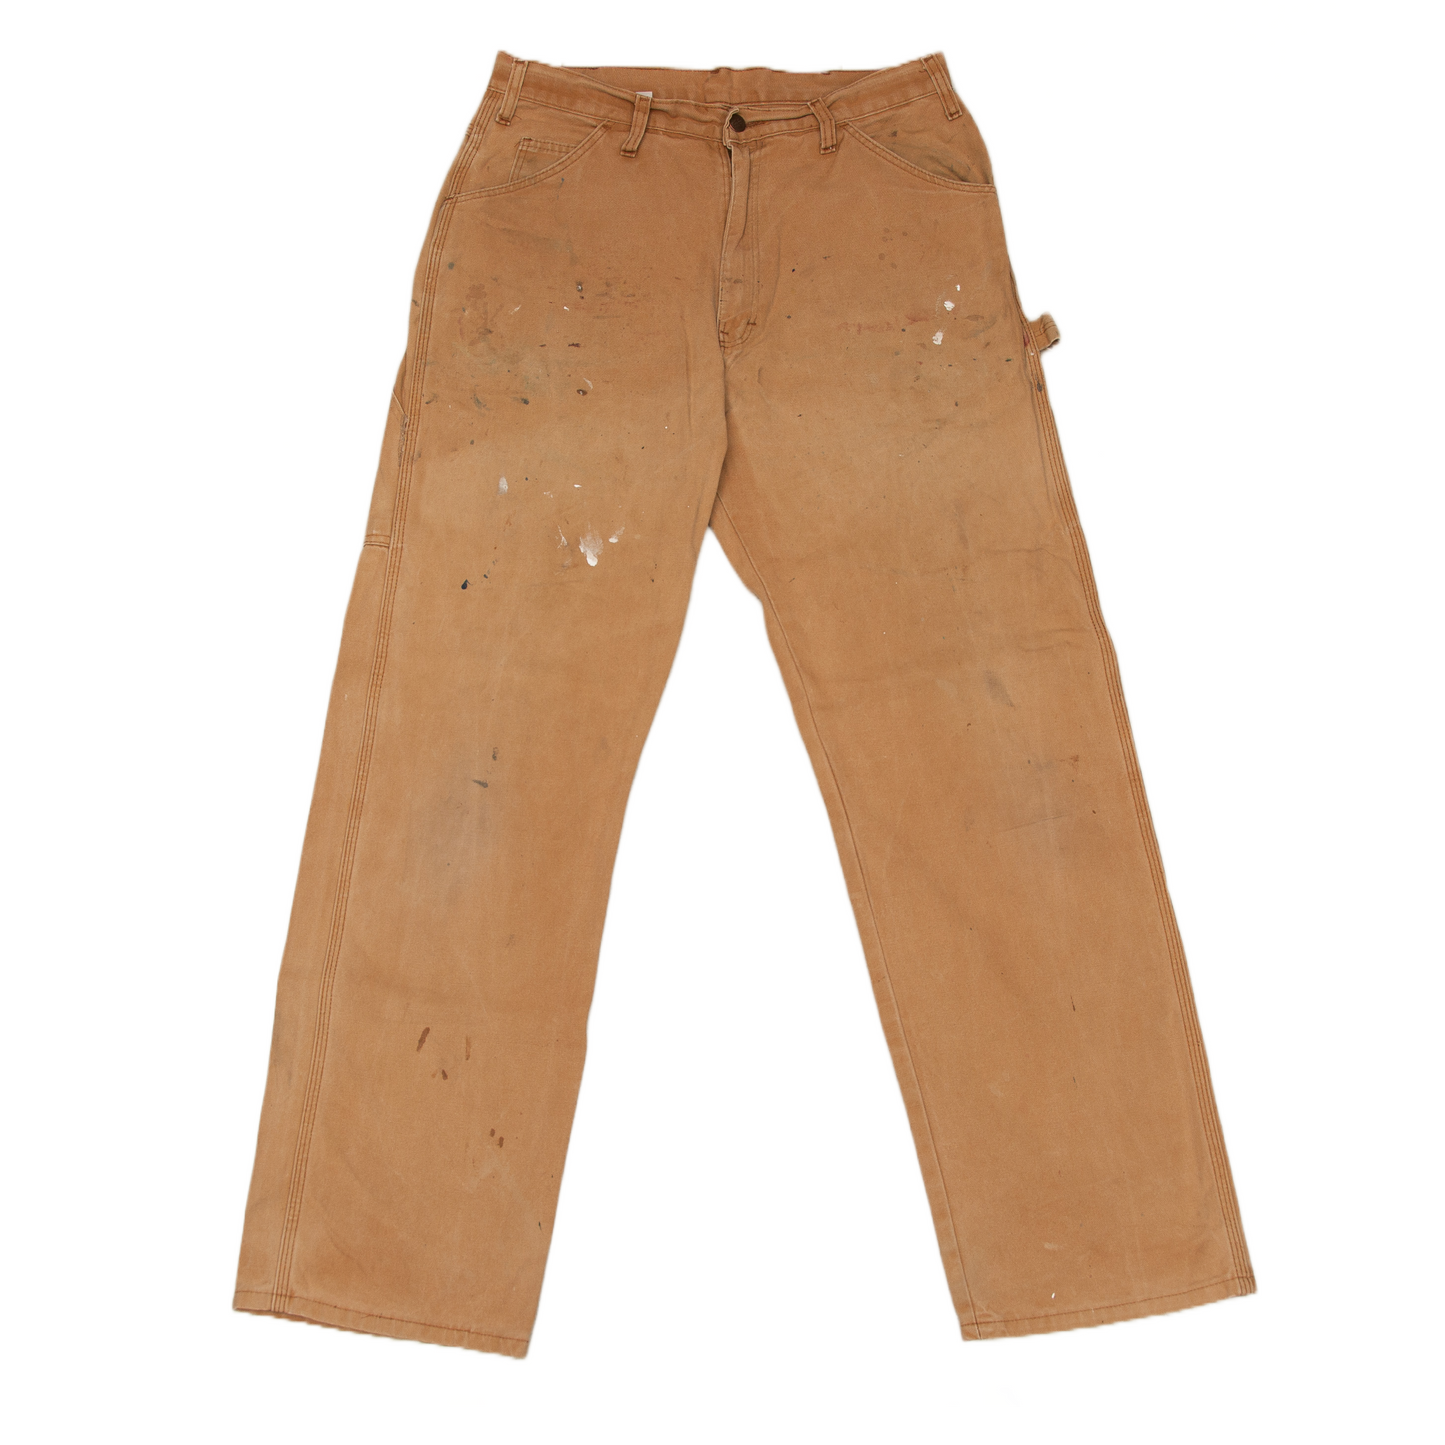 Vintage Dickies Carpenter Pants työhousut 90-luvulta (32x32)